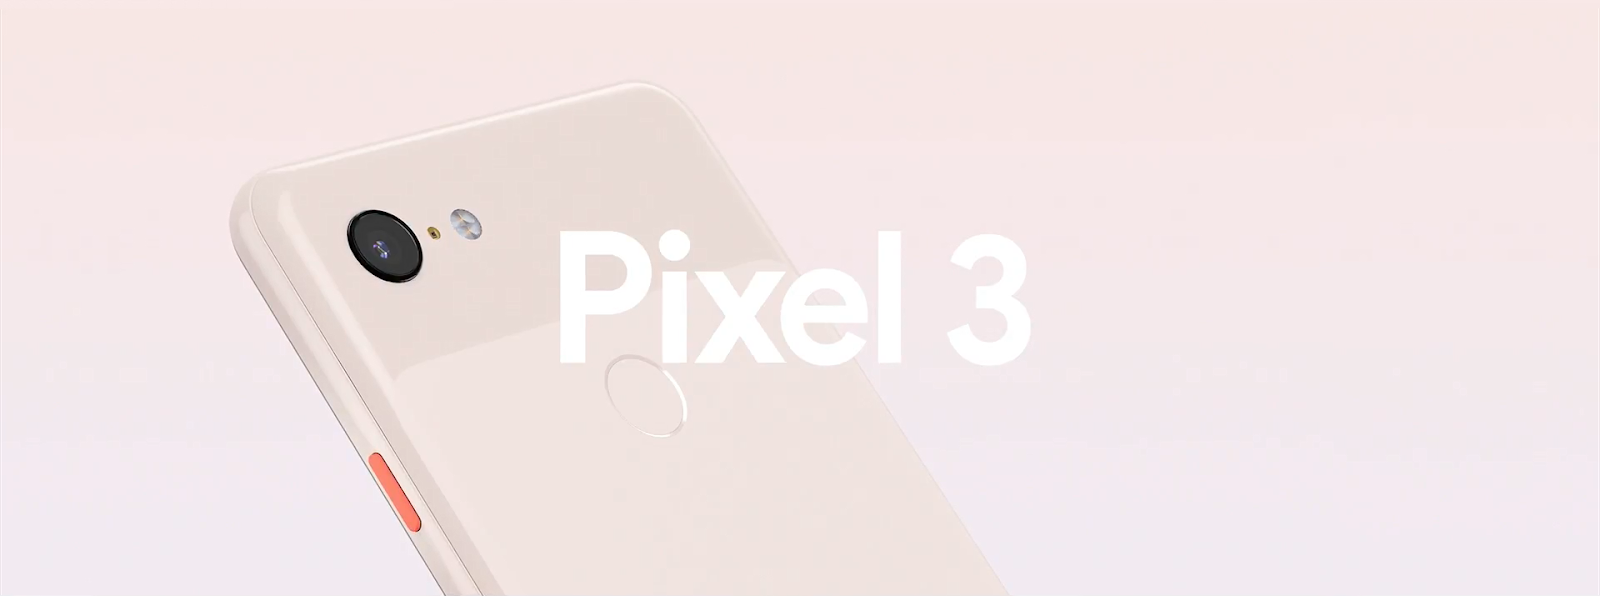 Google-Pixel-3-Pixel-3-XL